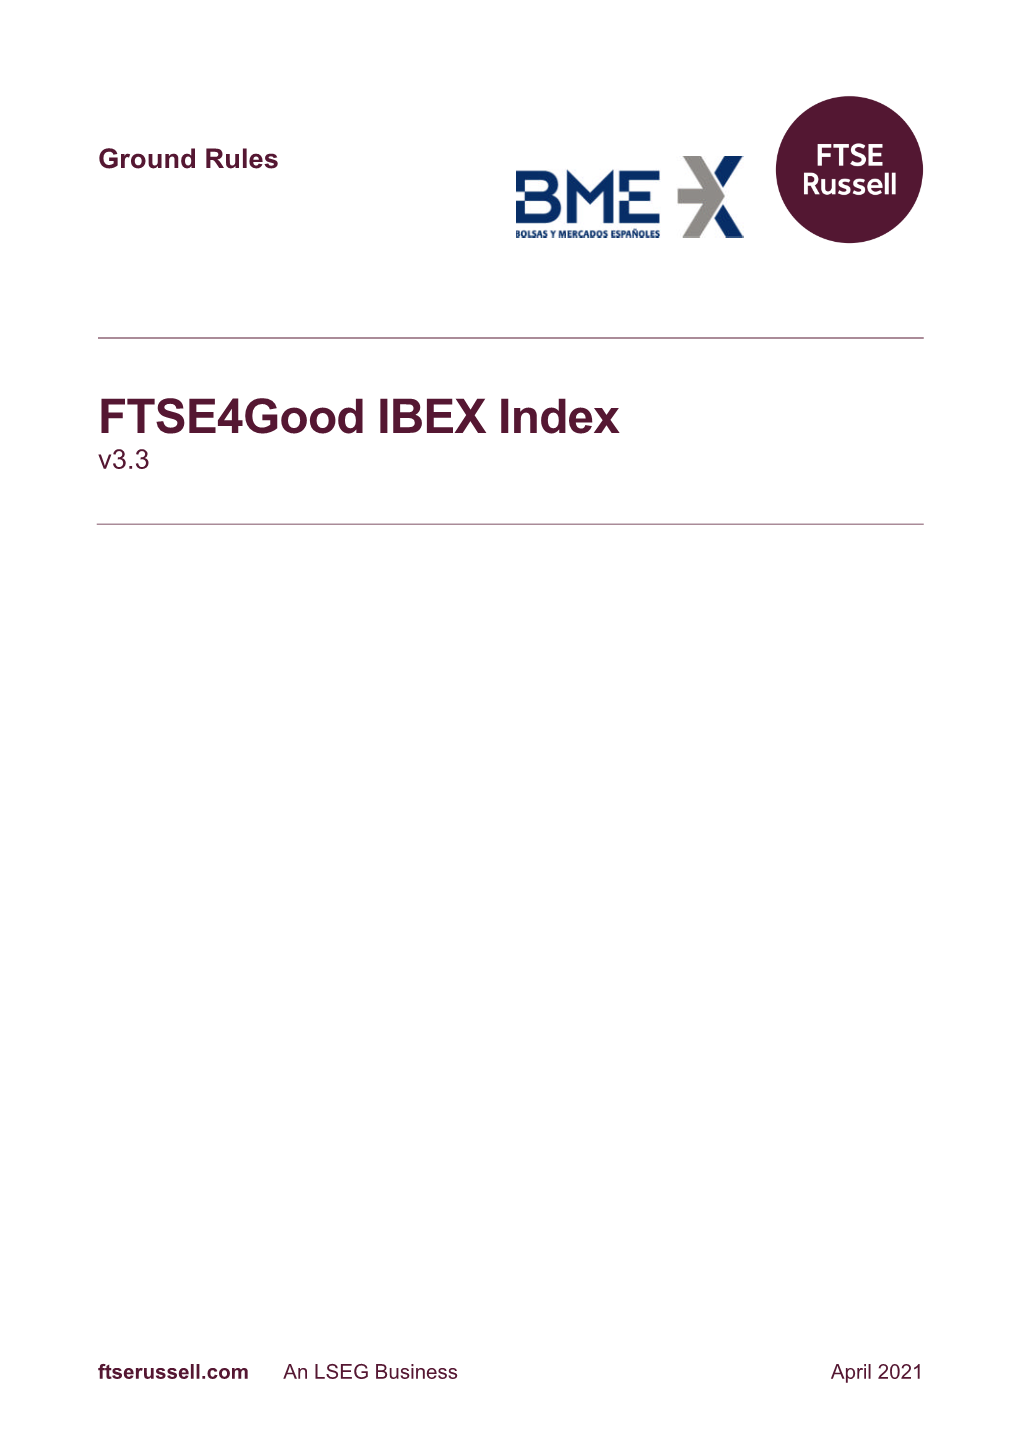 Ftse4good IBEX Index Ground Rules